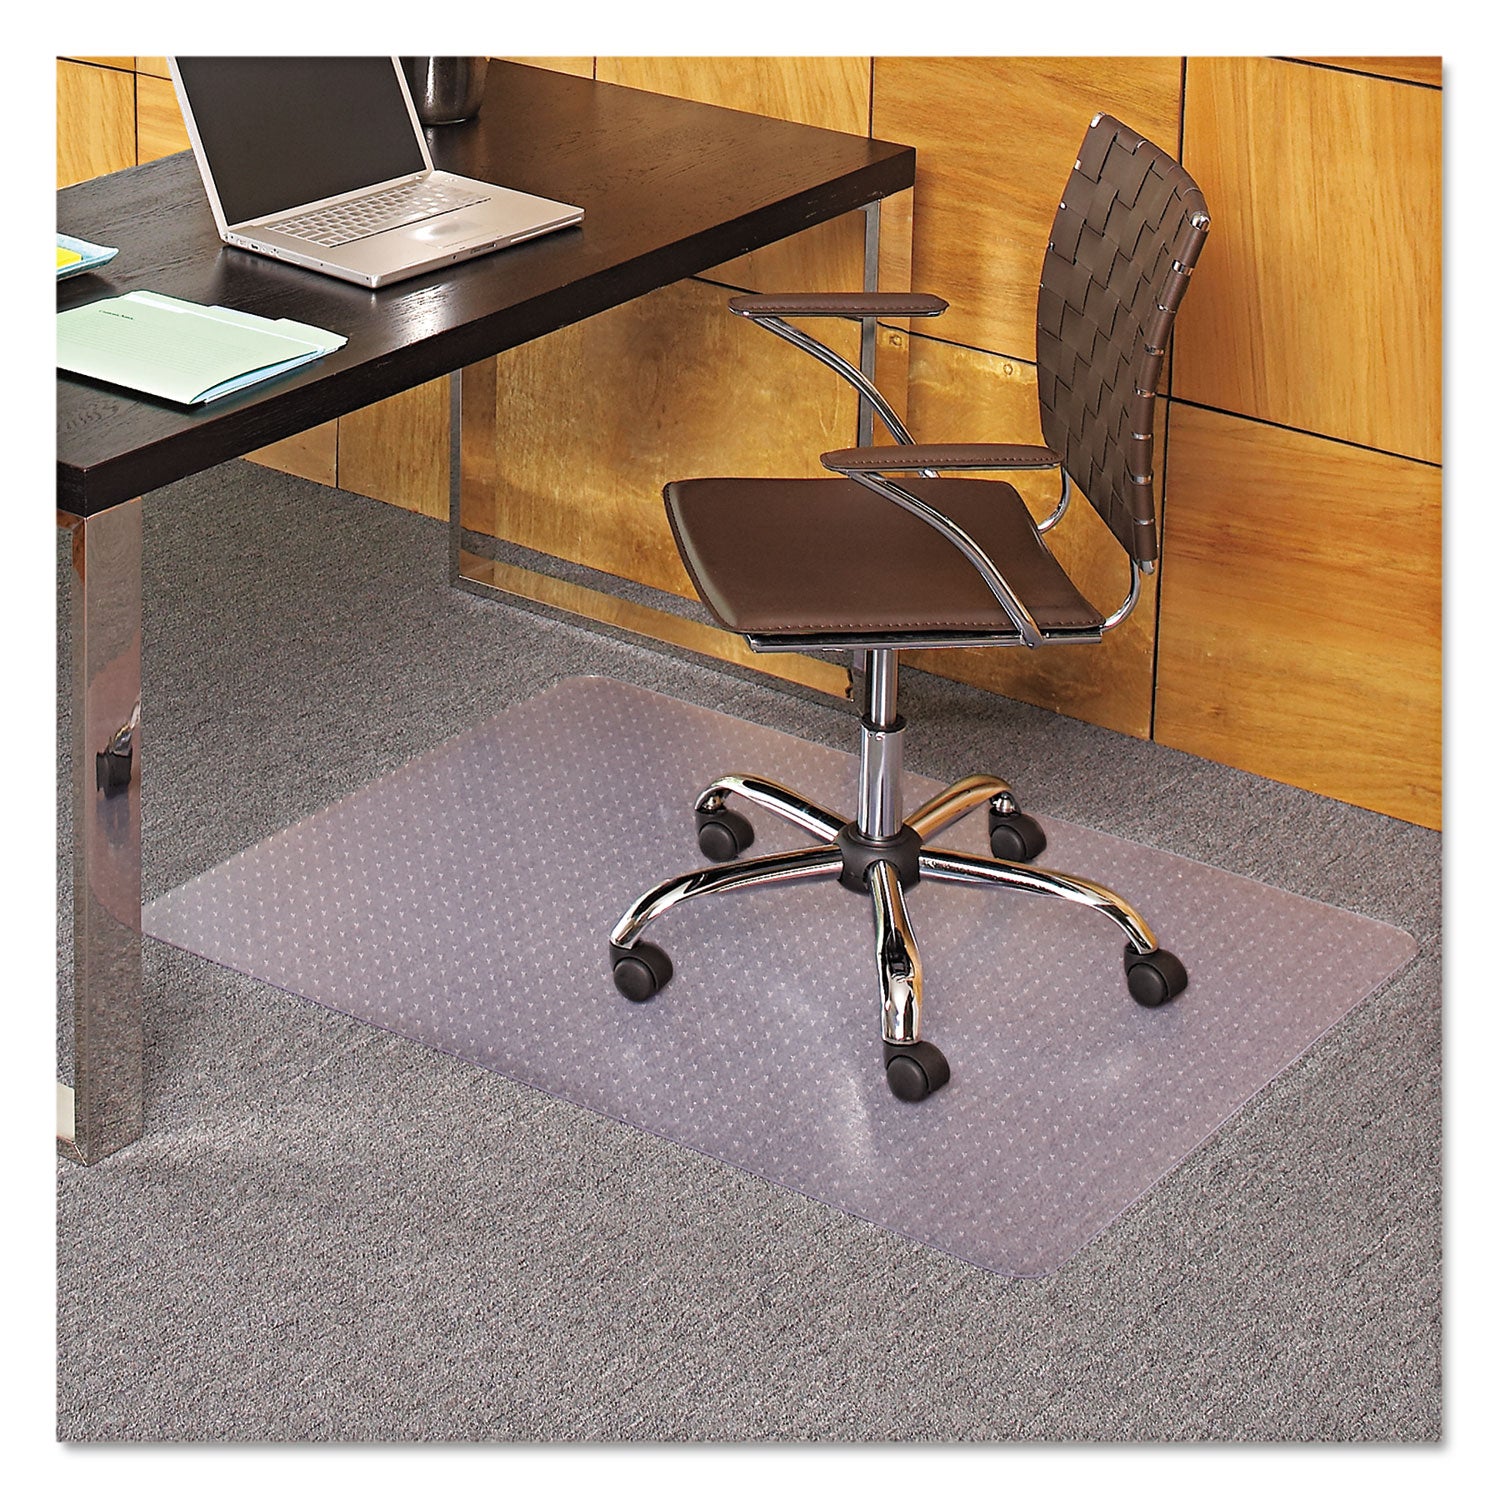 EverLife Light Use Chair Mat for Flat Pile Carpet, Rectangular, 36 x 44, Clear - 